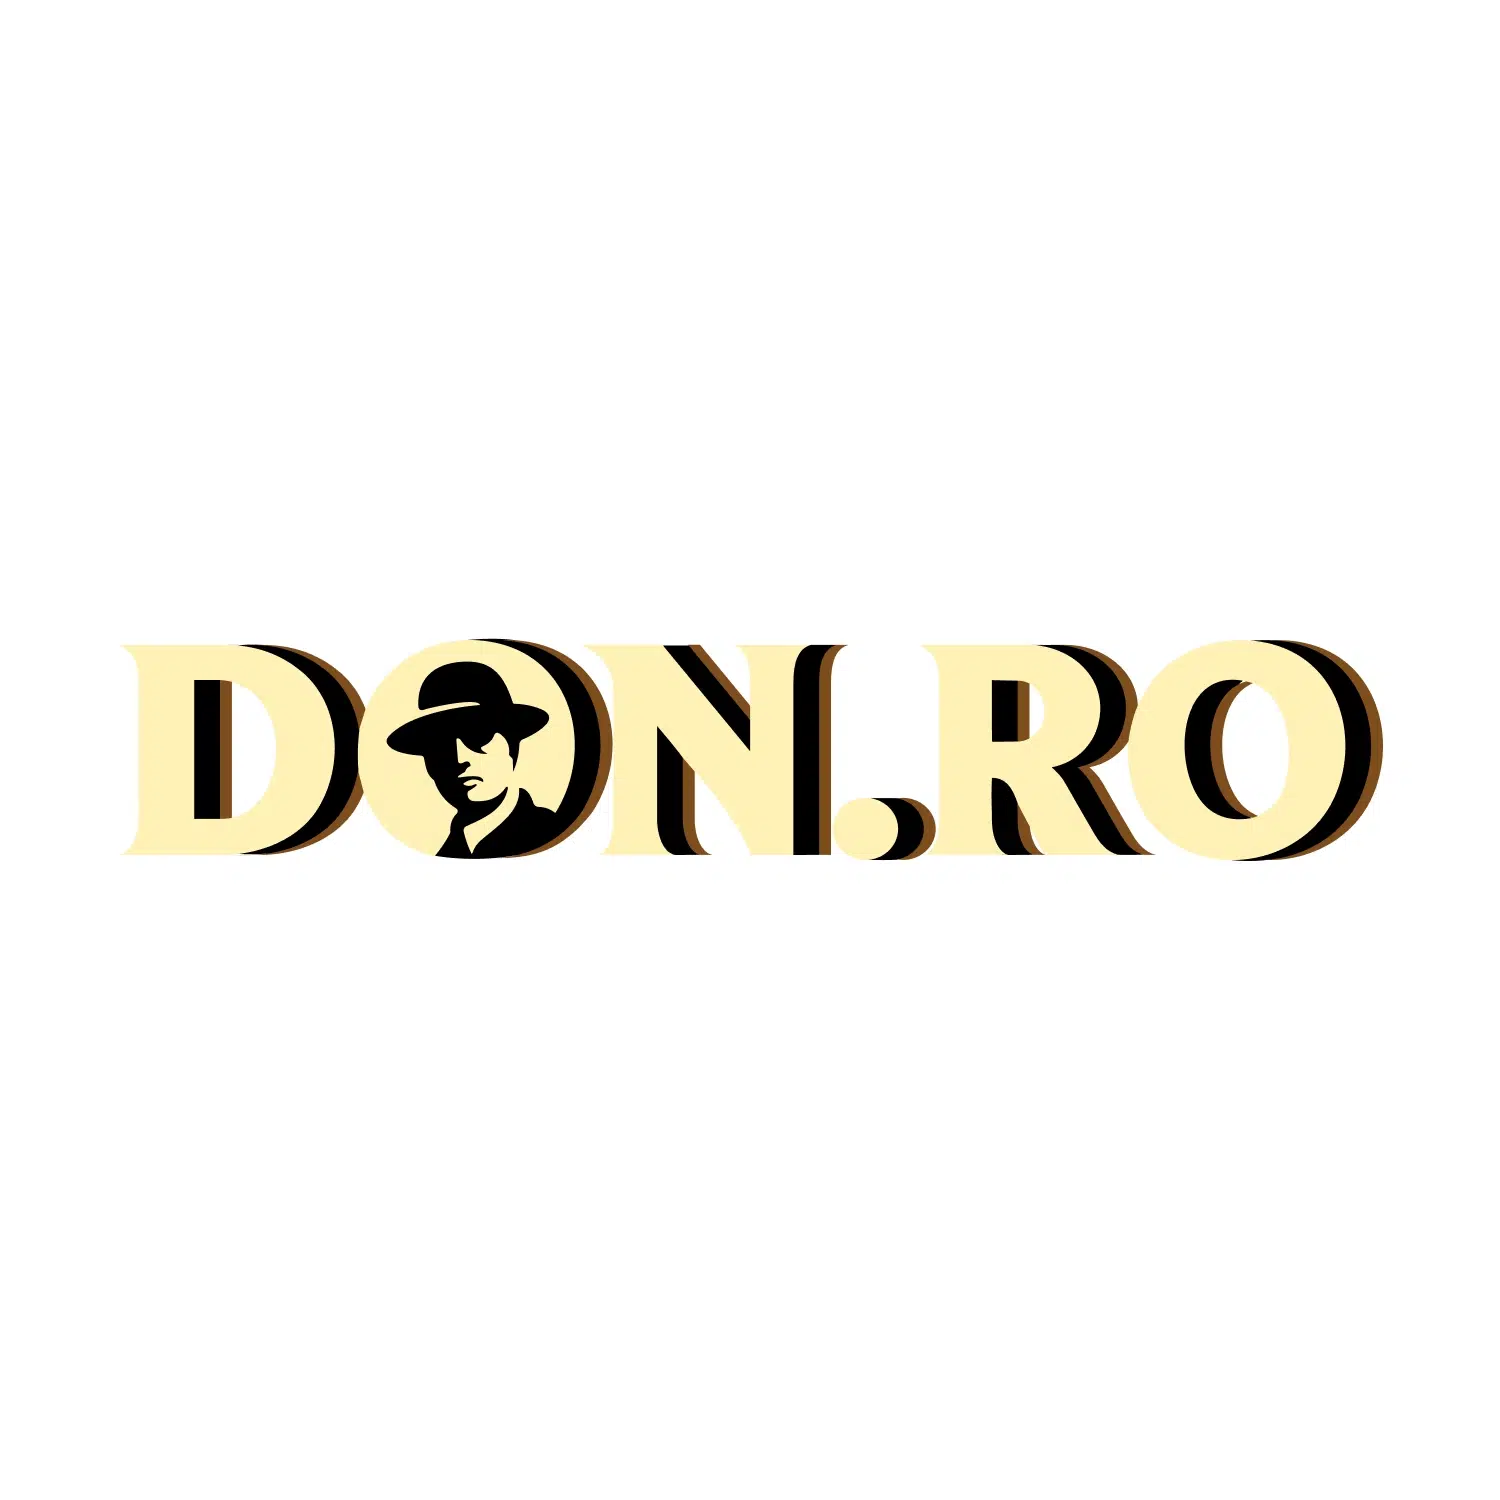 Don casino logo rotund 1500x1500 alb